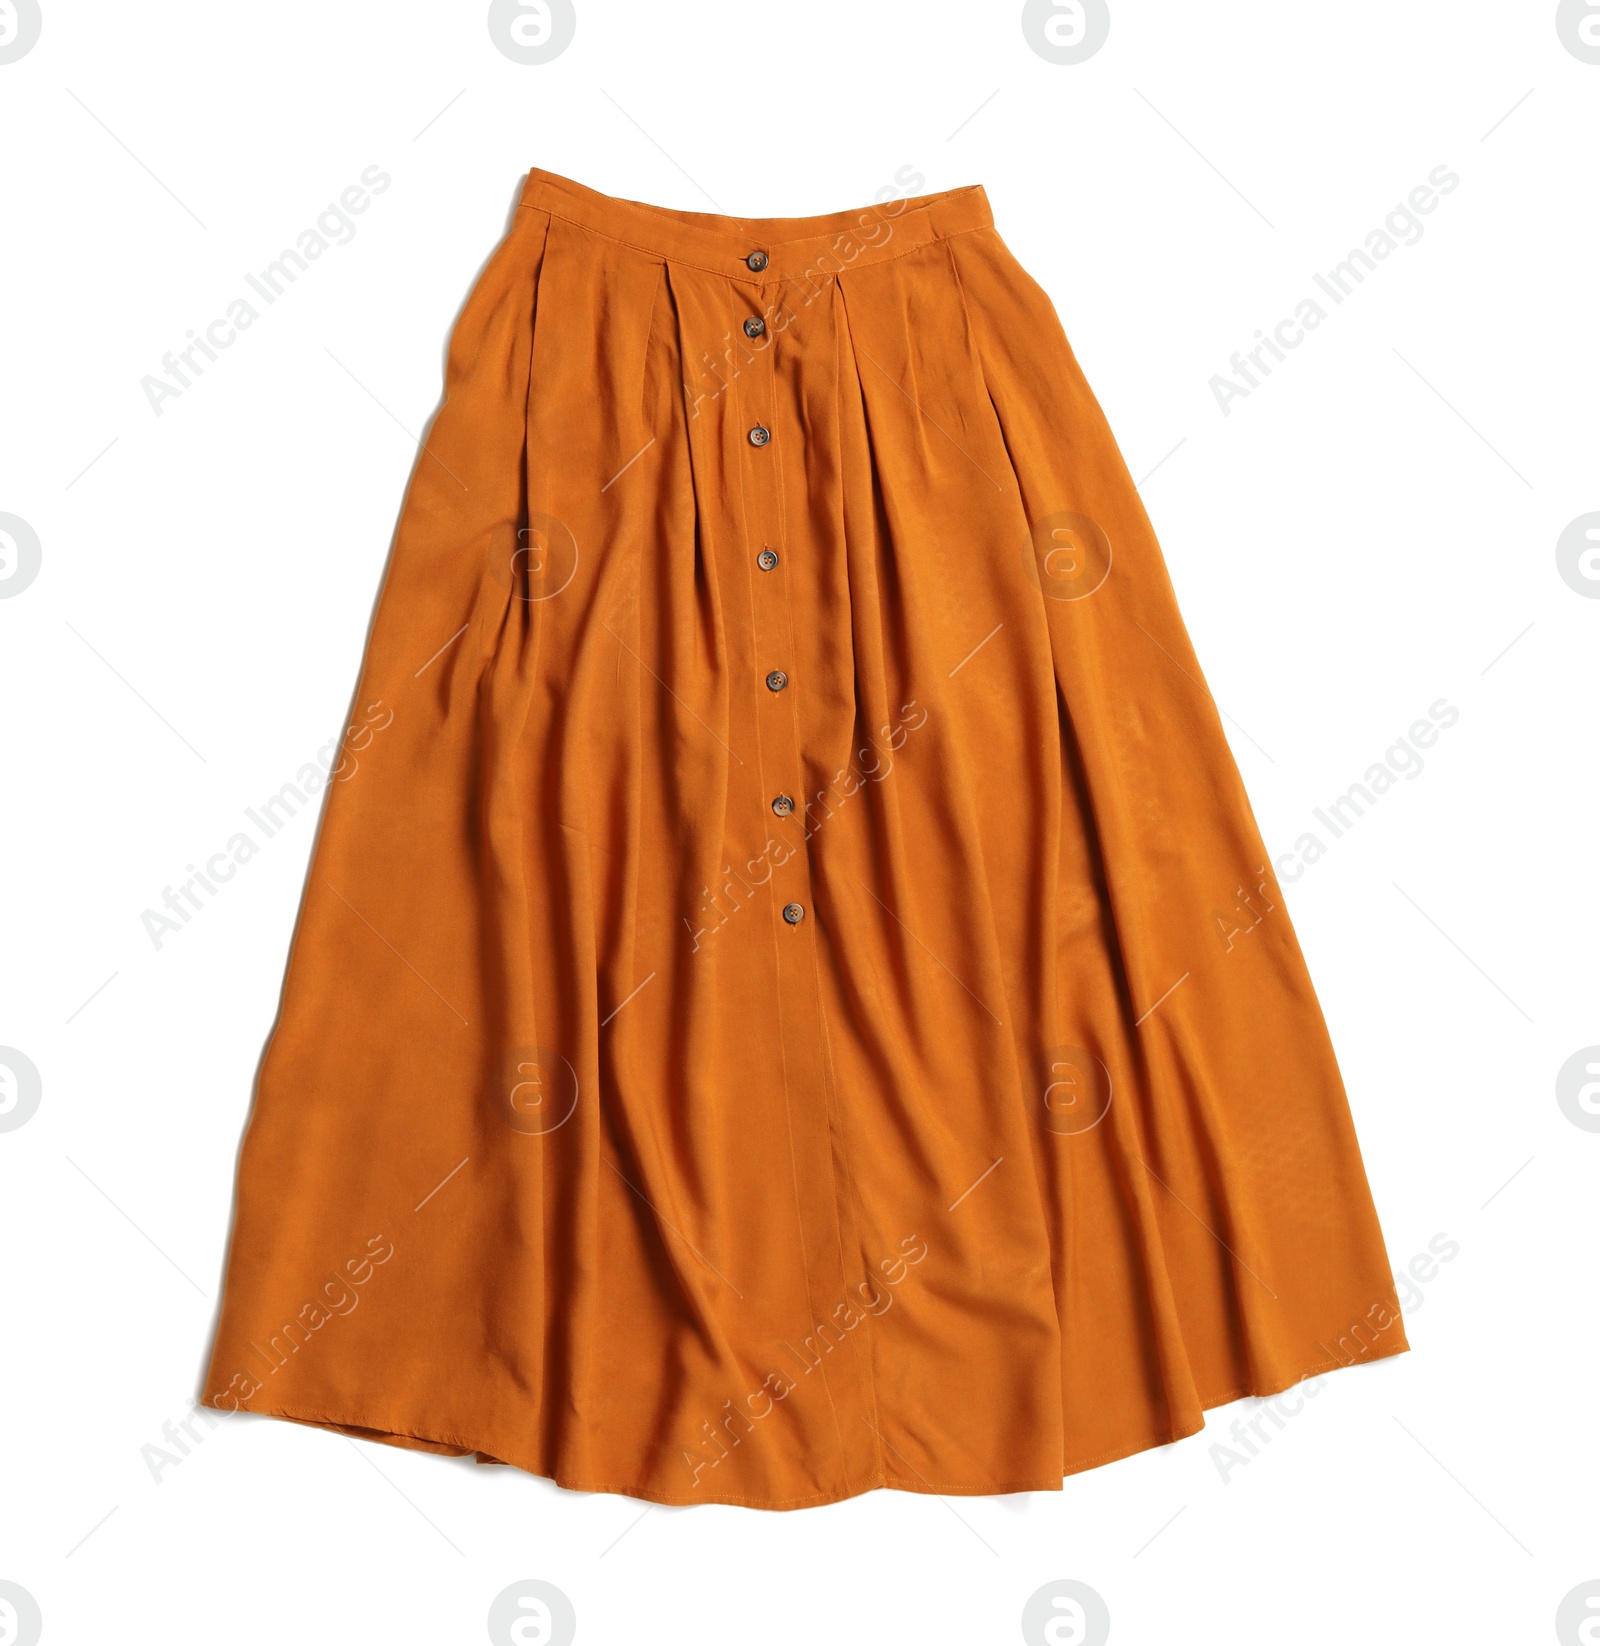 Photo of Elegant long orange skirt isolated on white, top view